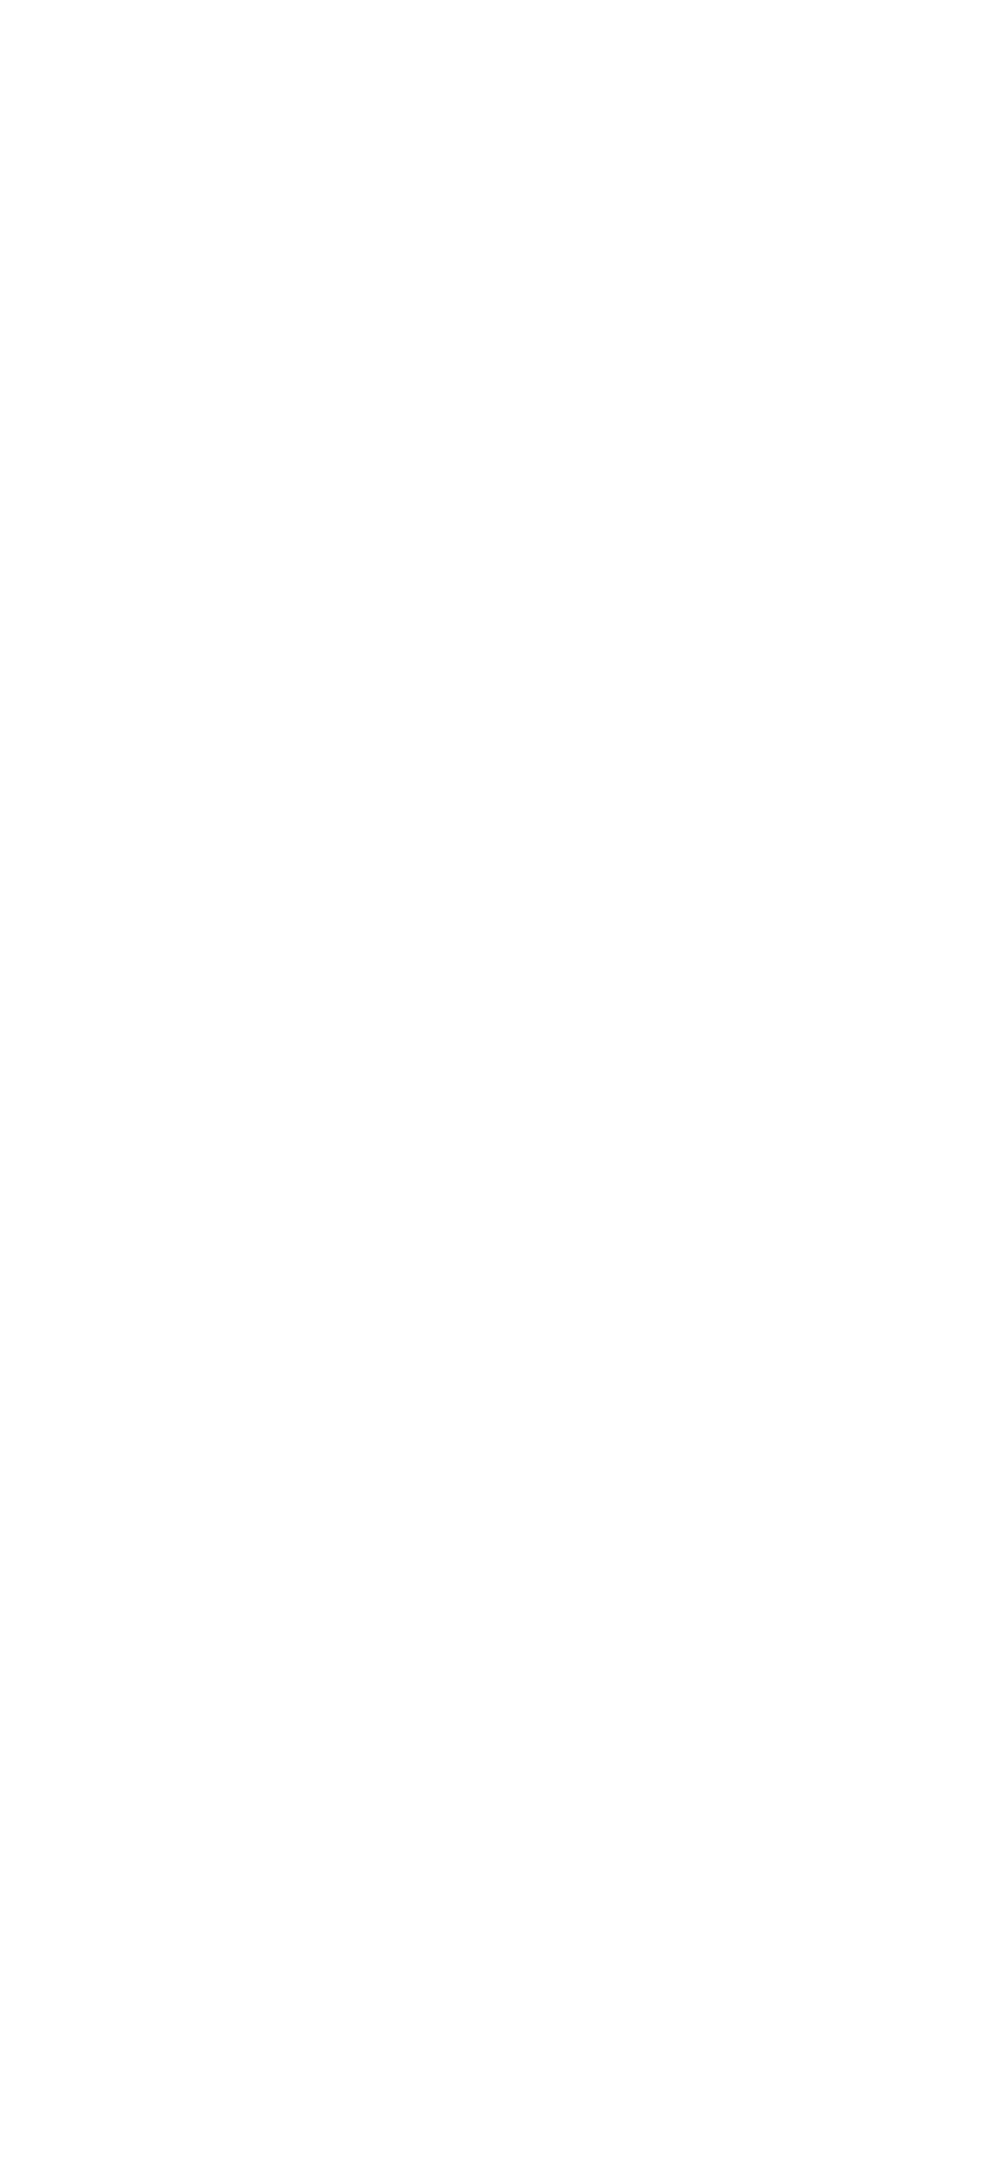 My Child (Spontaneous) Lyrics